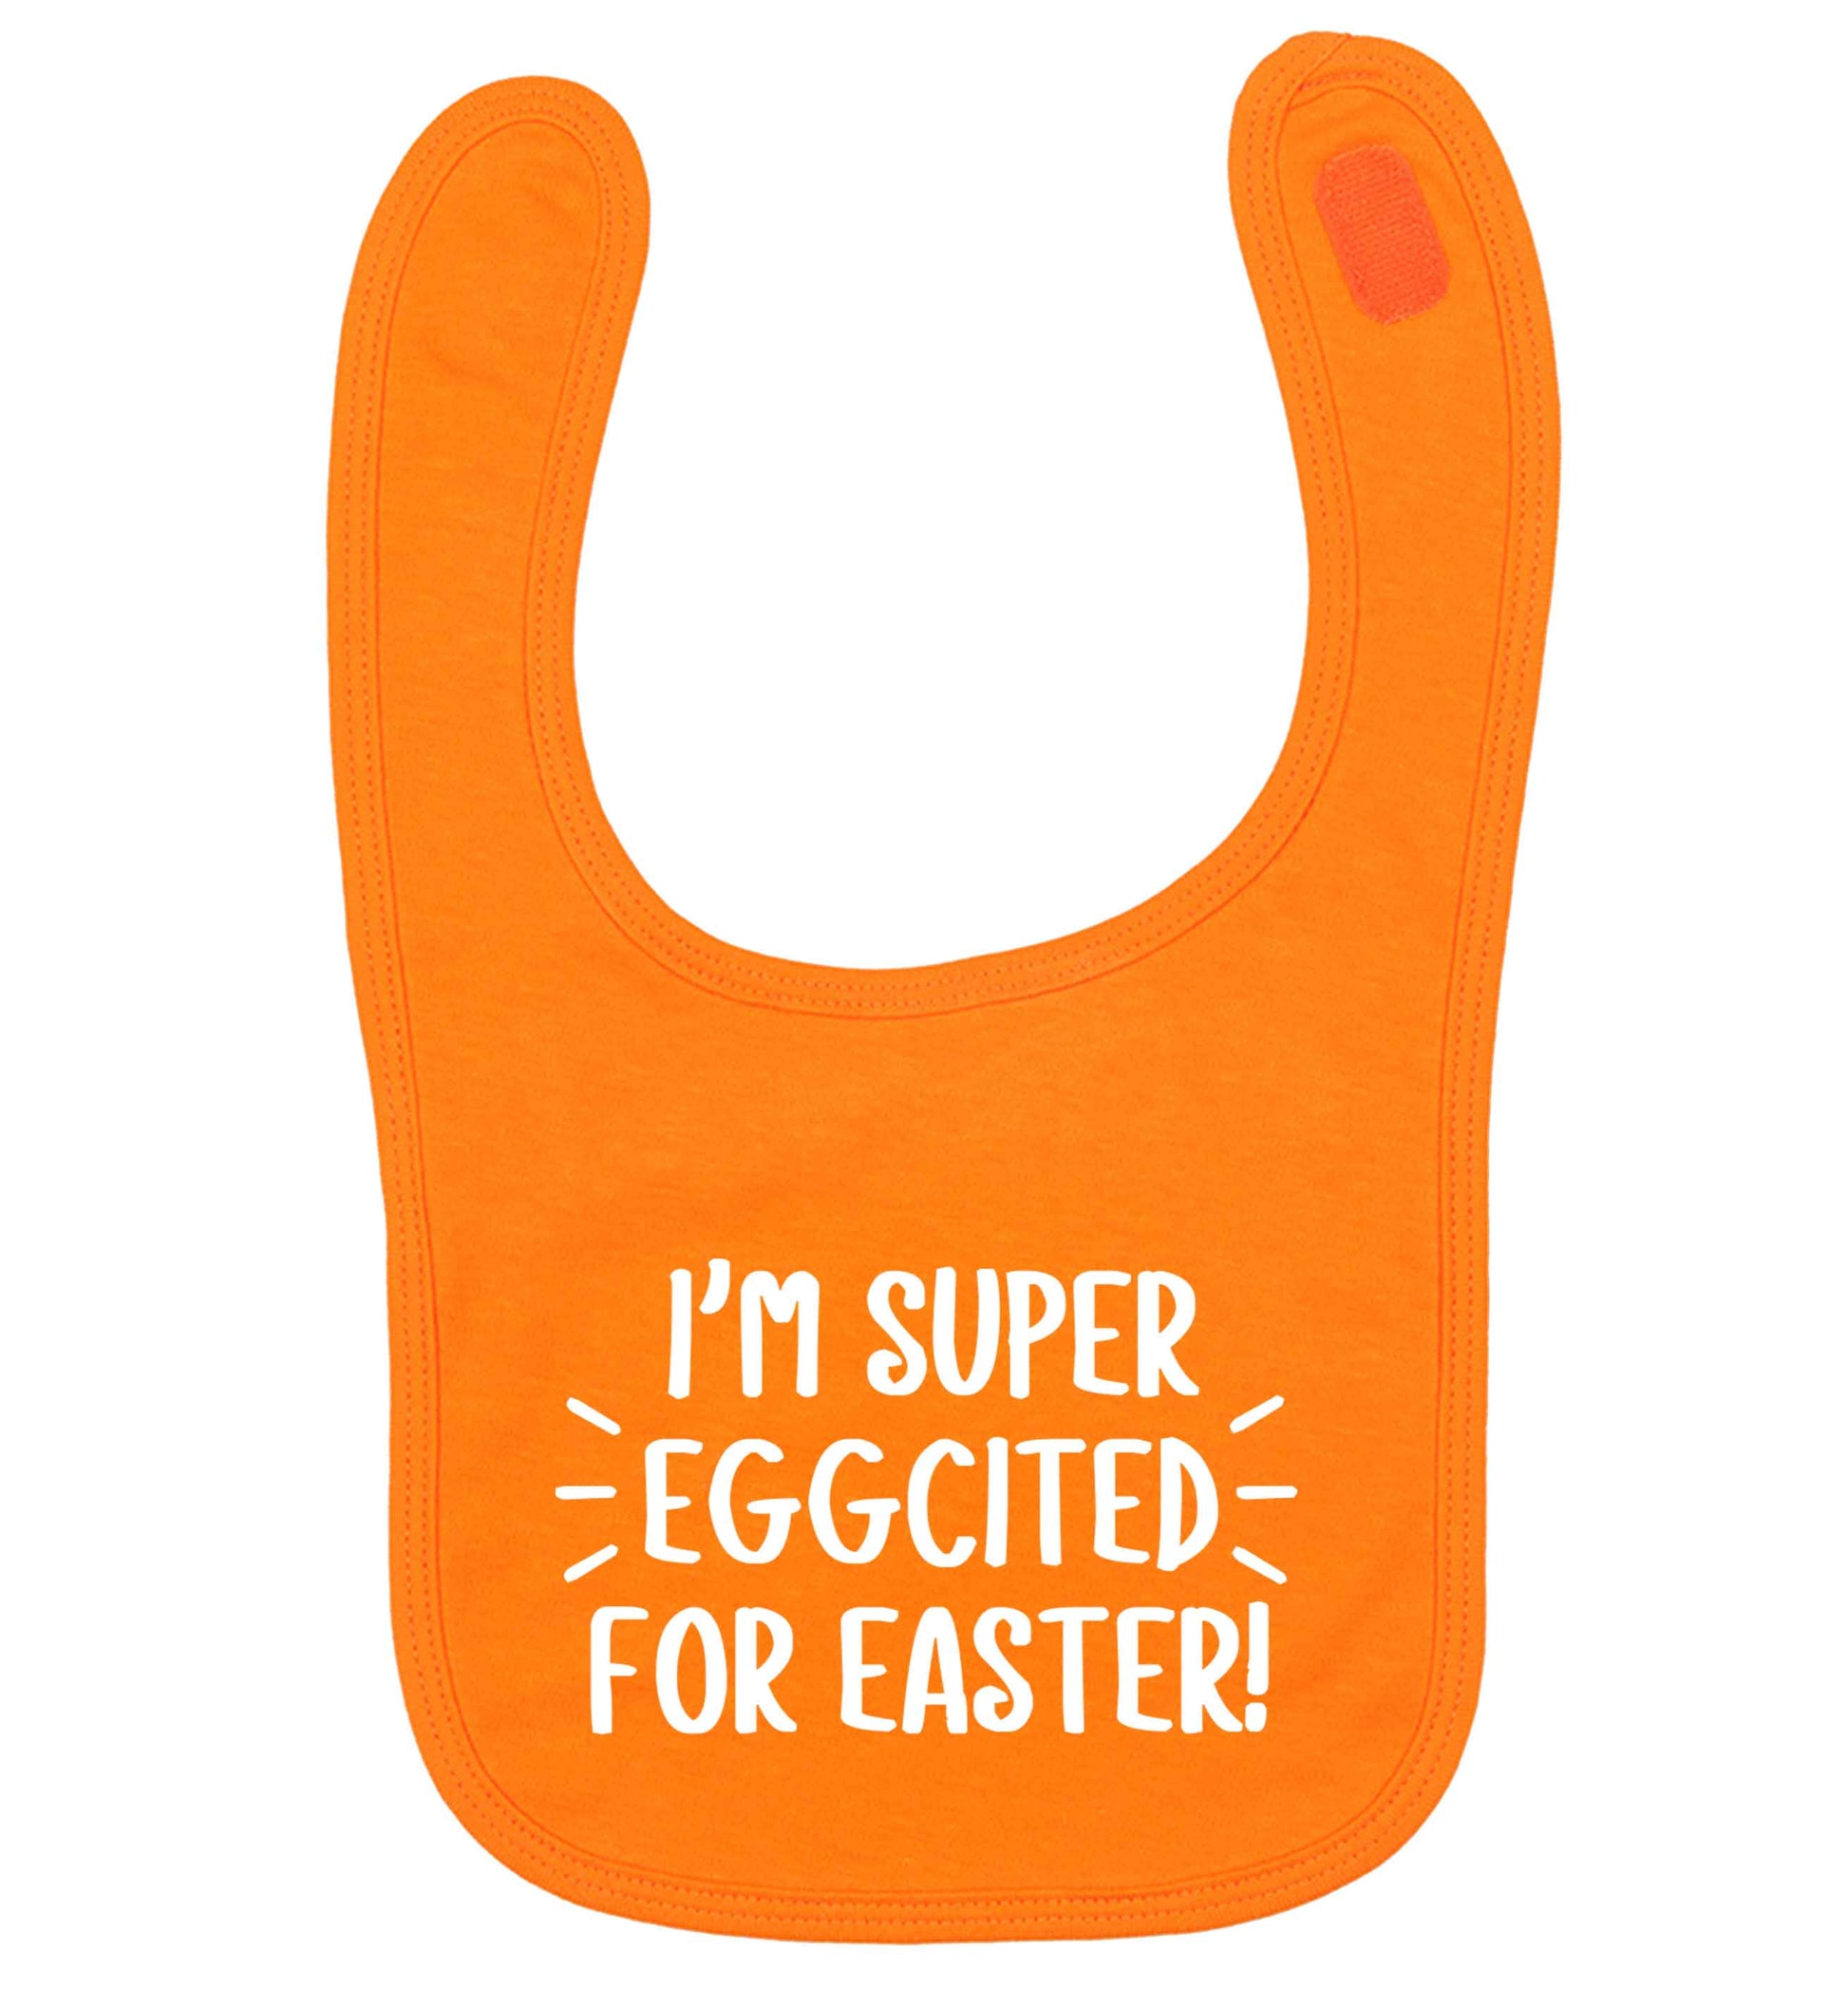 I'm super eggcited for Easter orange baby bib